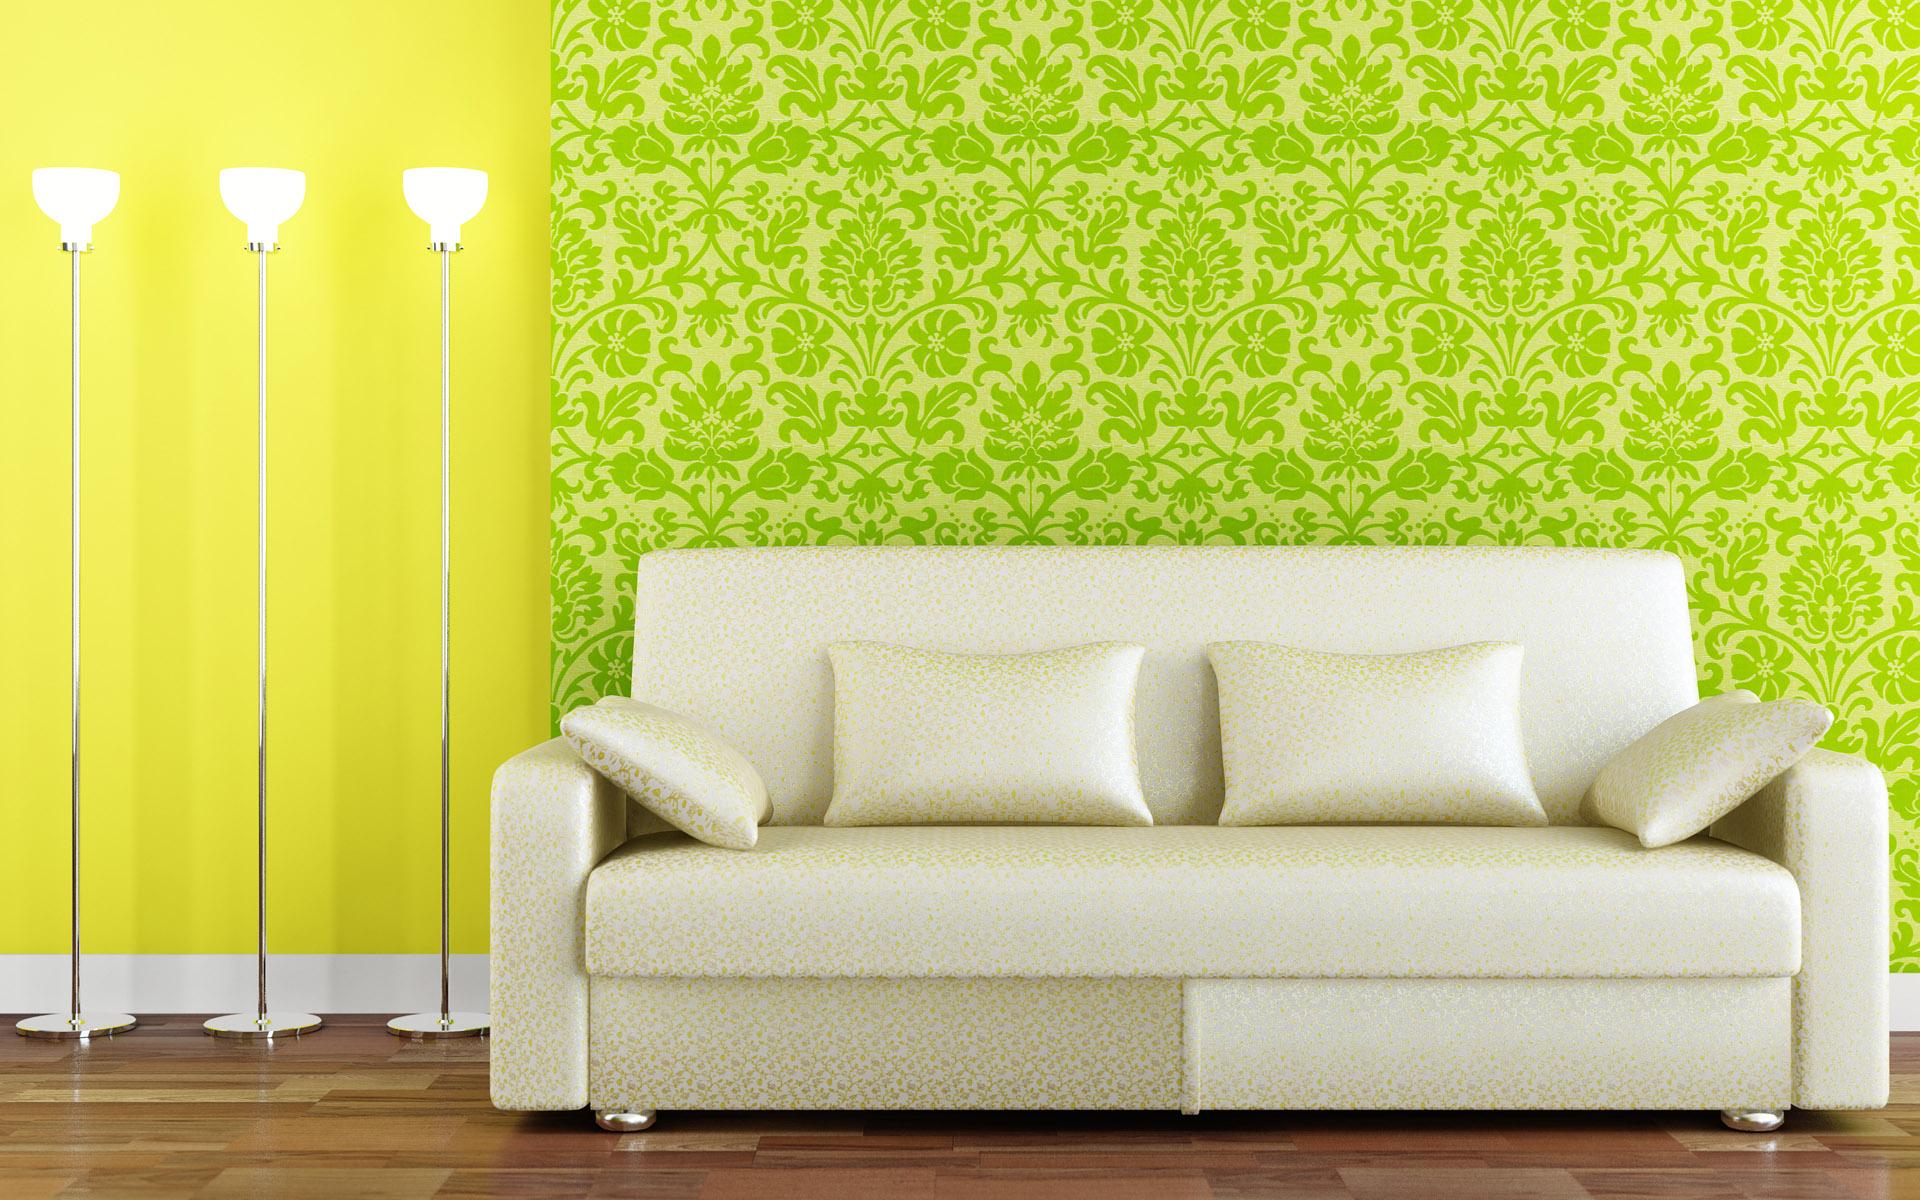  modern wallpapers design and interior home wallpaper   interior design